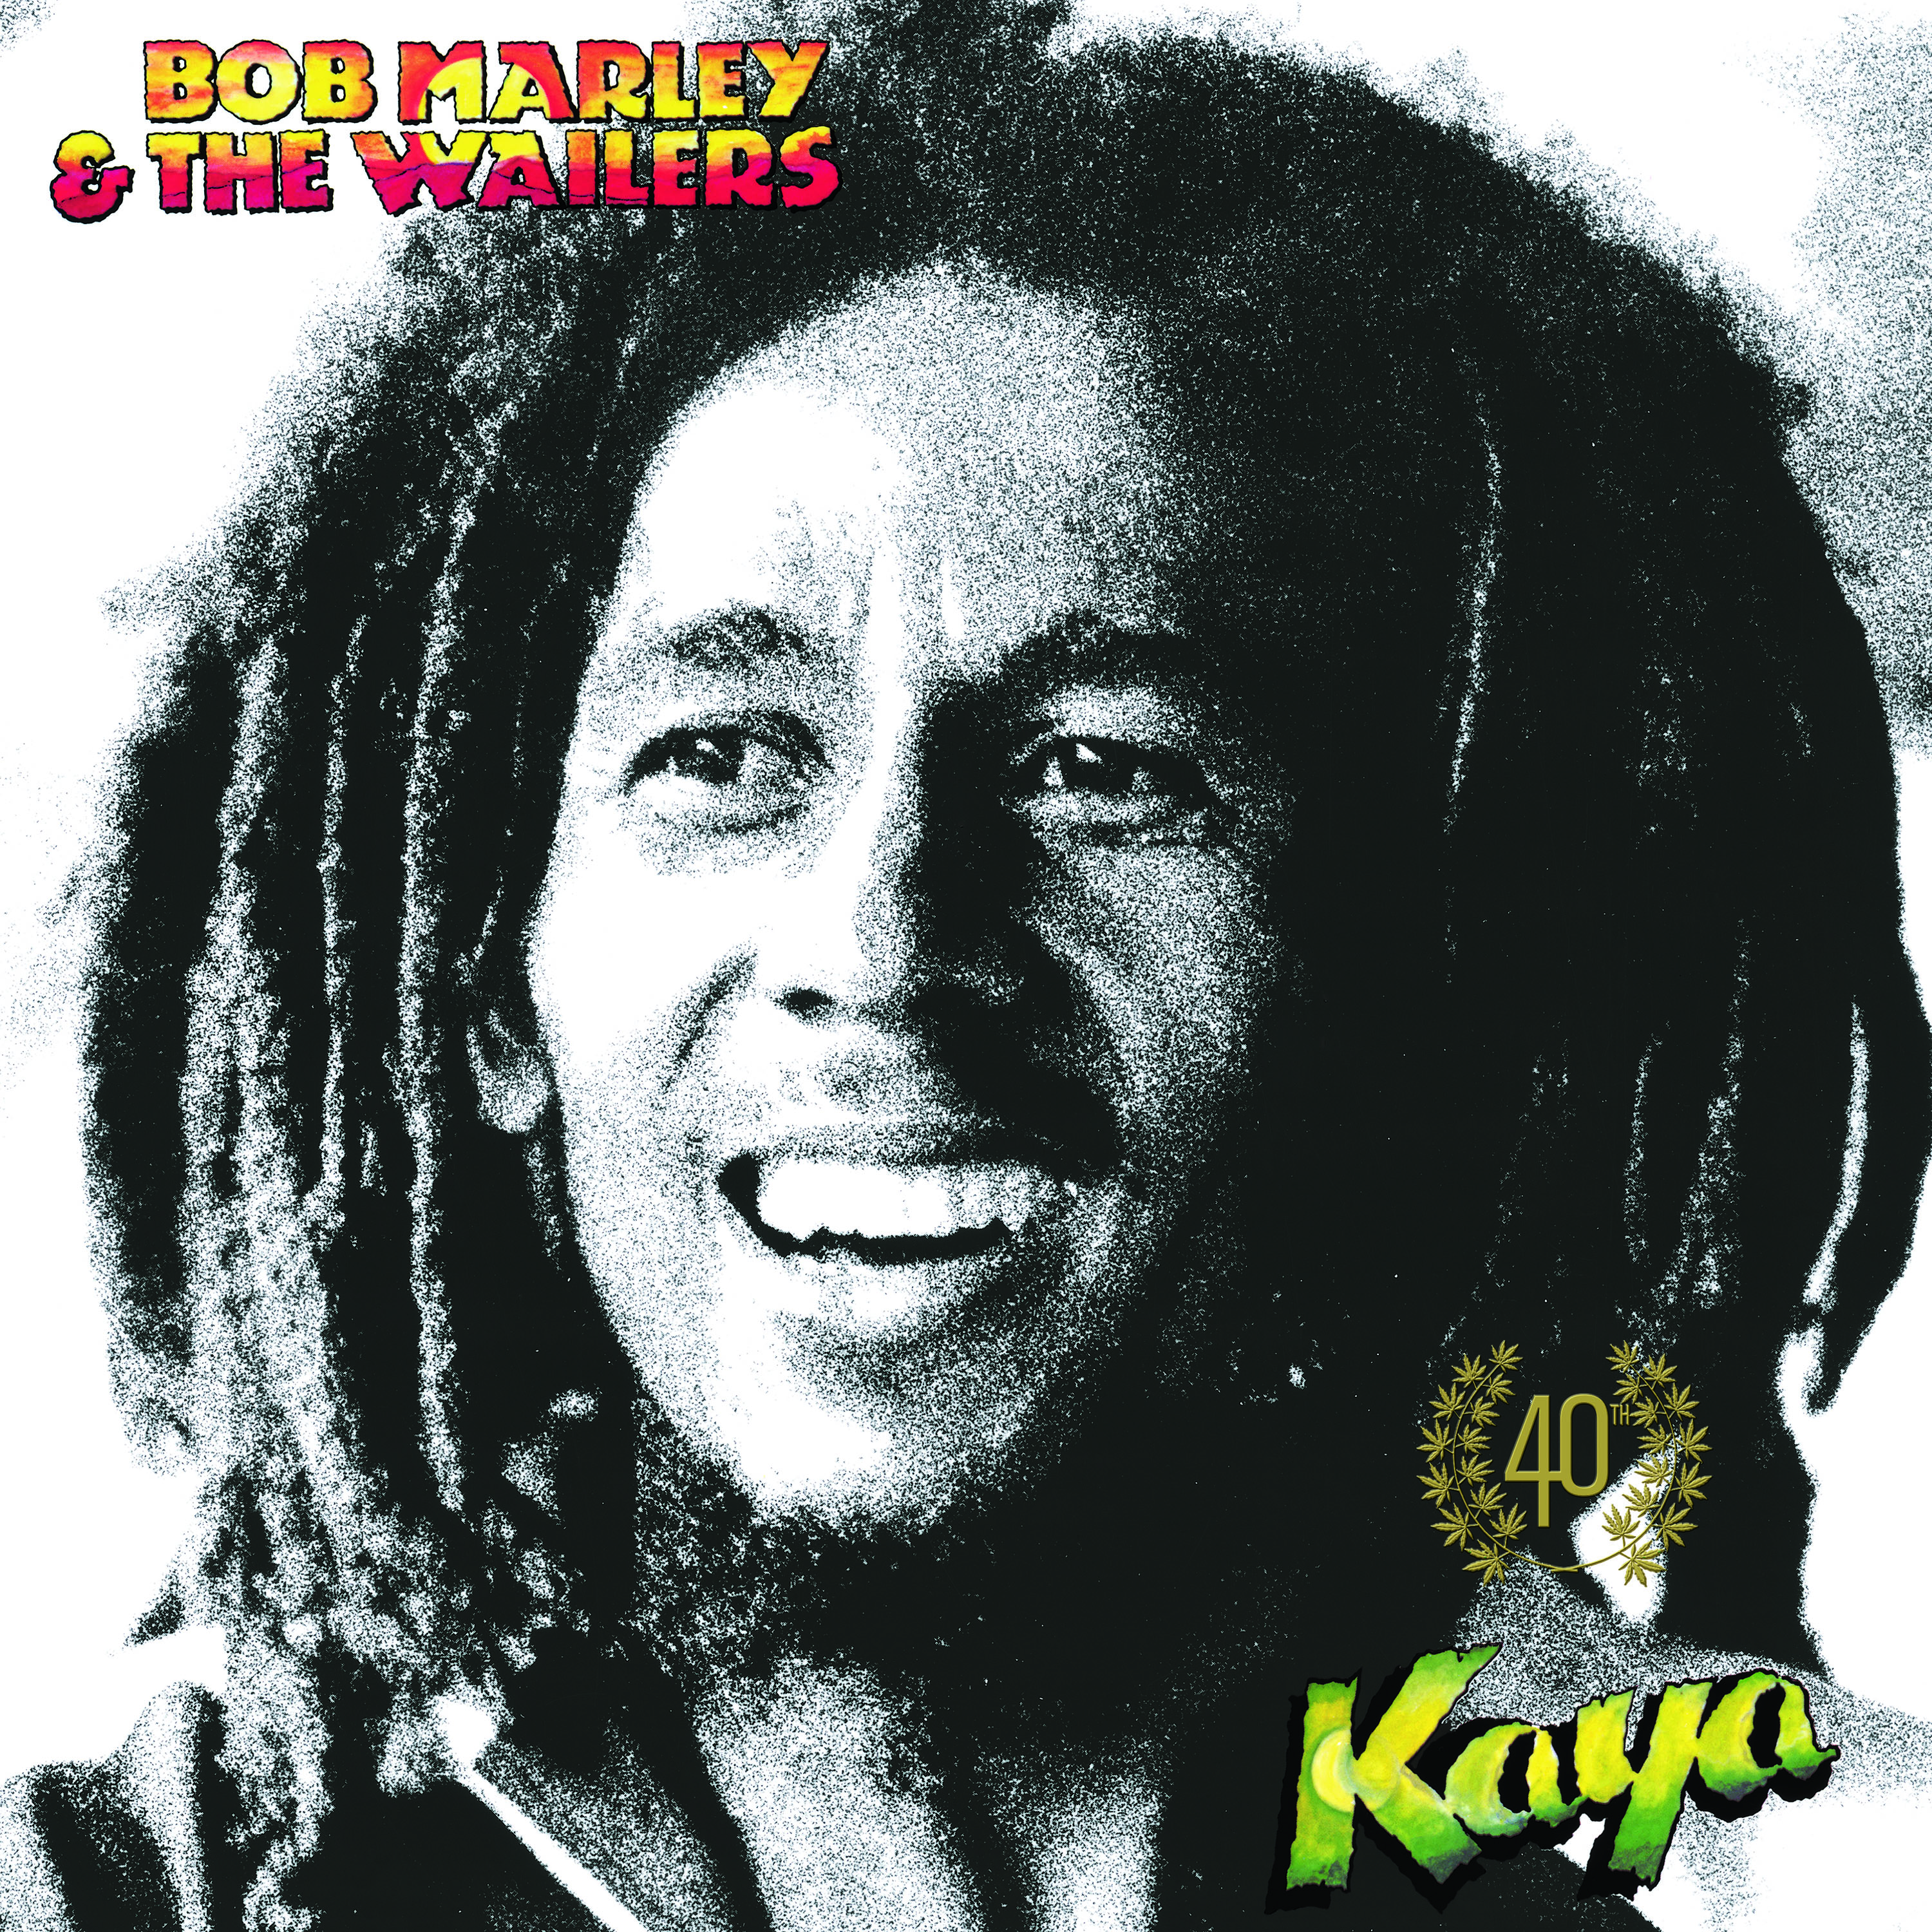 Bob Marley and The Wailers Kaya 40th Anniversary